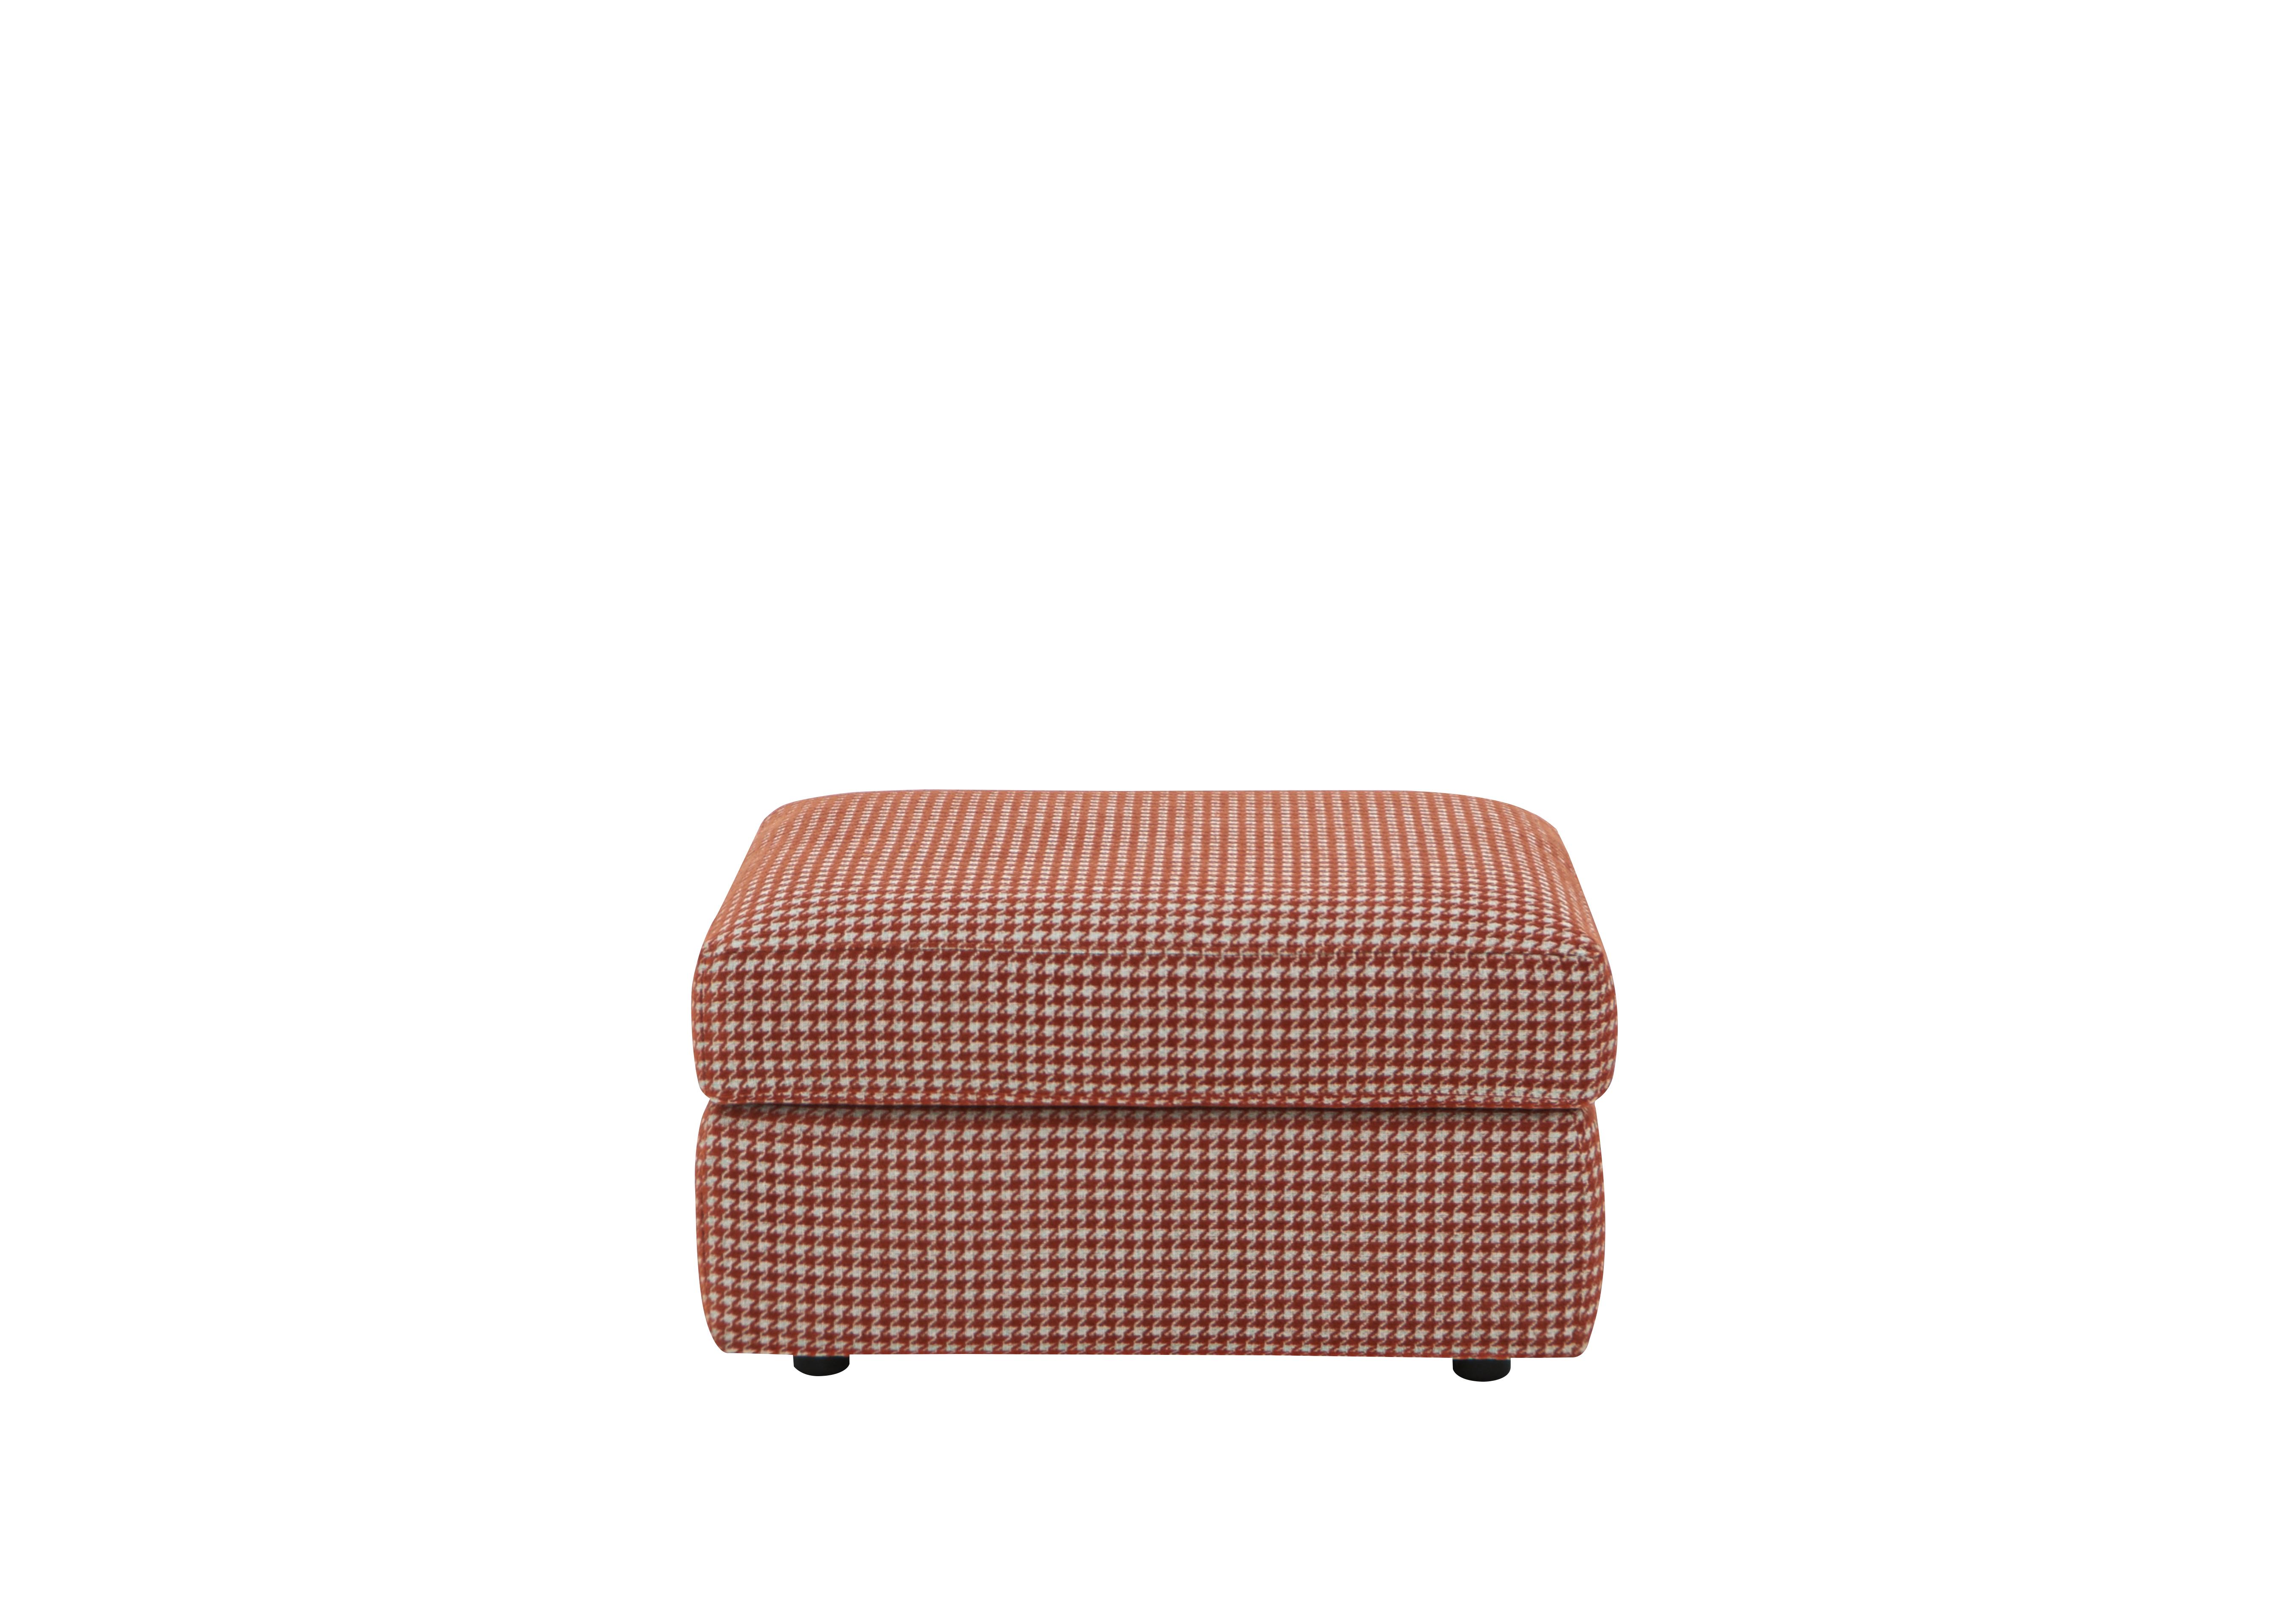 Avon Fabric Storage Footstool in C813 Malta Autumn on Furniture Village